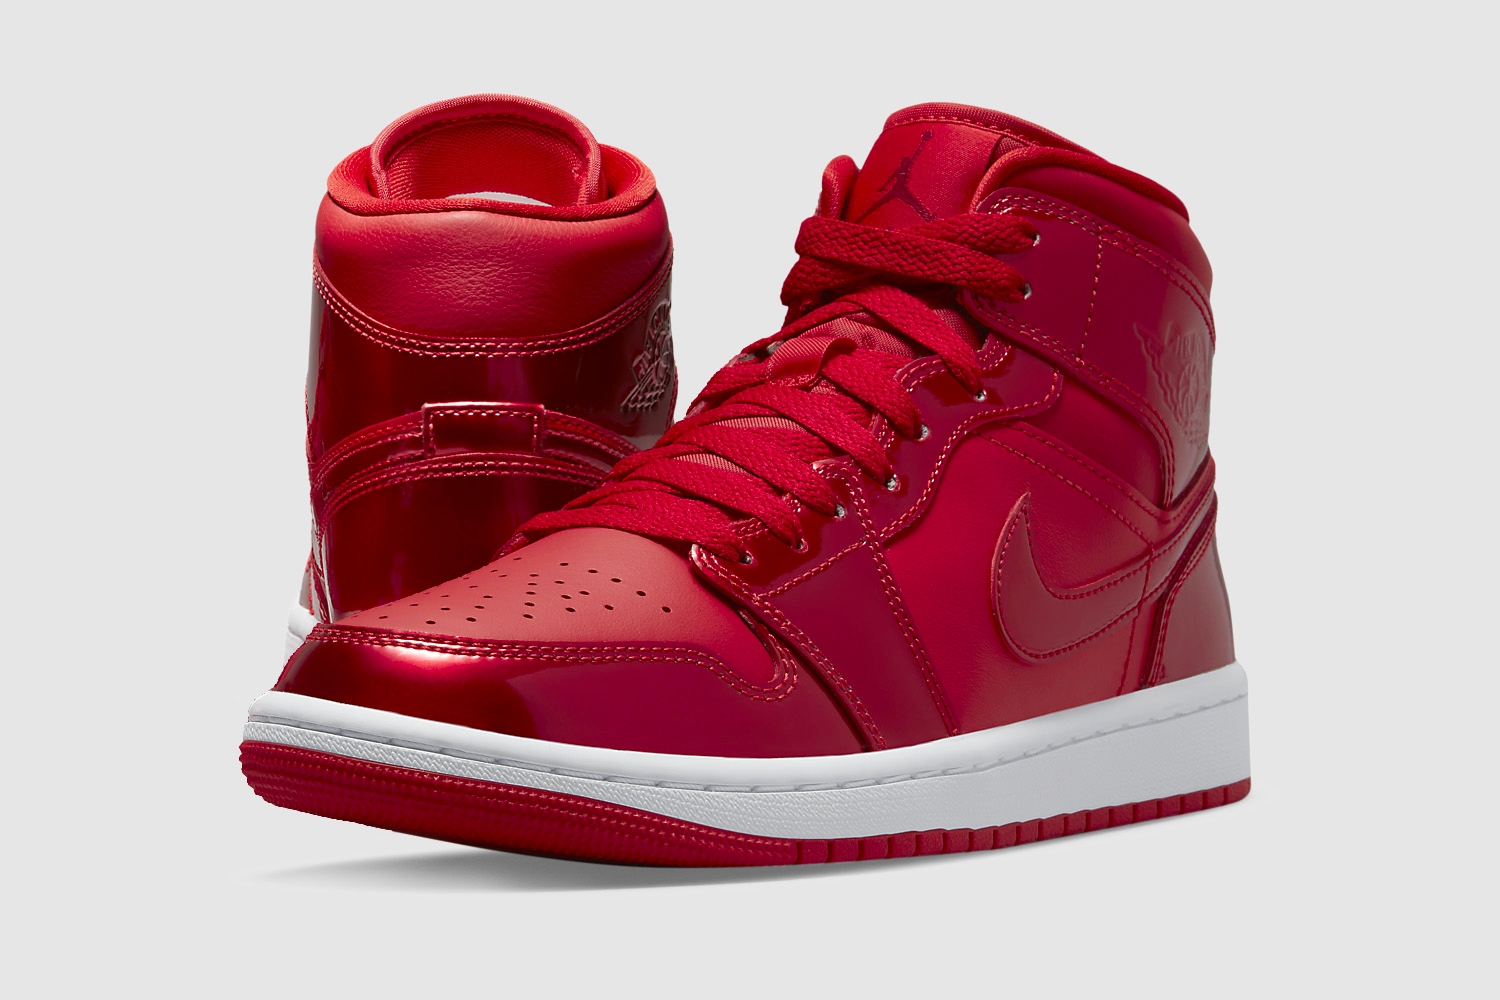 De Air Jordan 1 Mid in een &#8216;Pomegranate&#8217; colorway